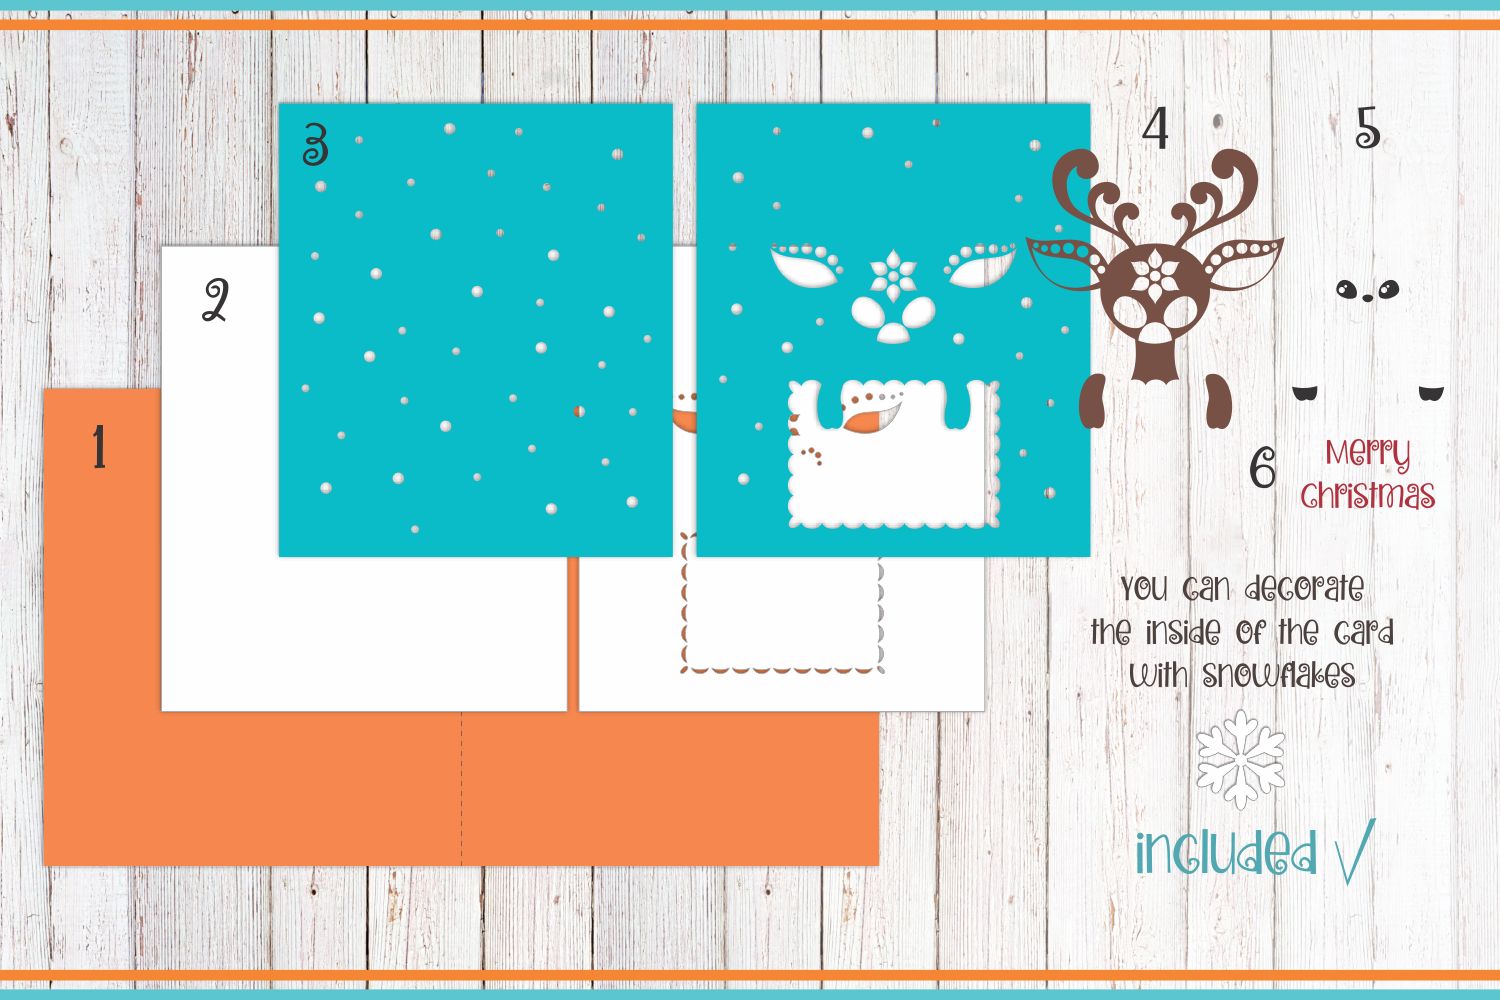 3d Layered Christmas Greeting Card With Deer By Olga Belova Thehungryjpeg Com